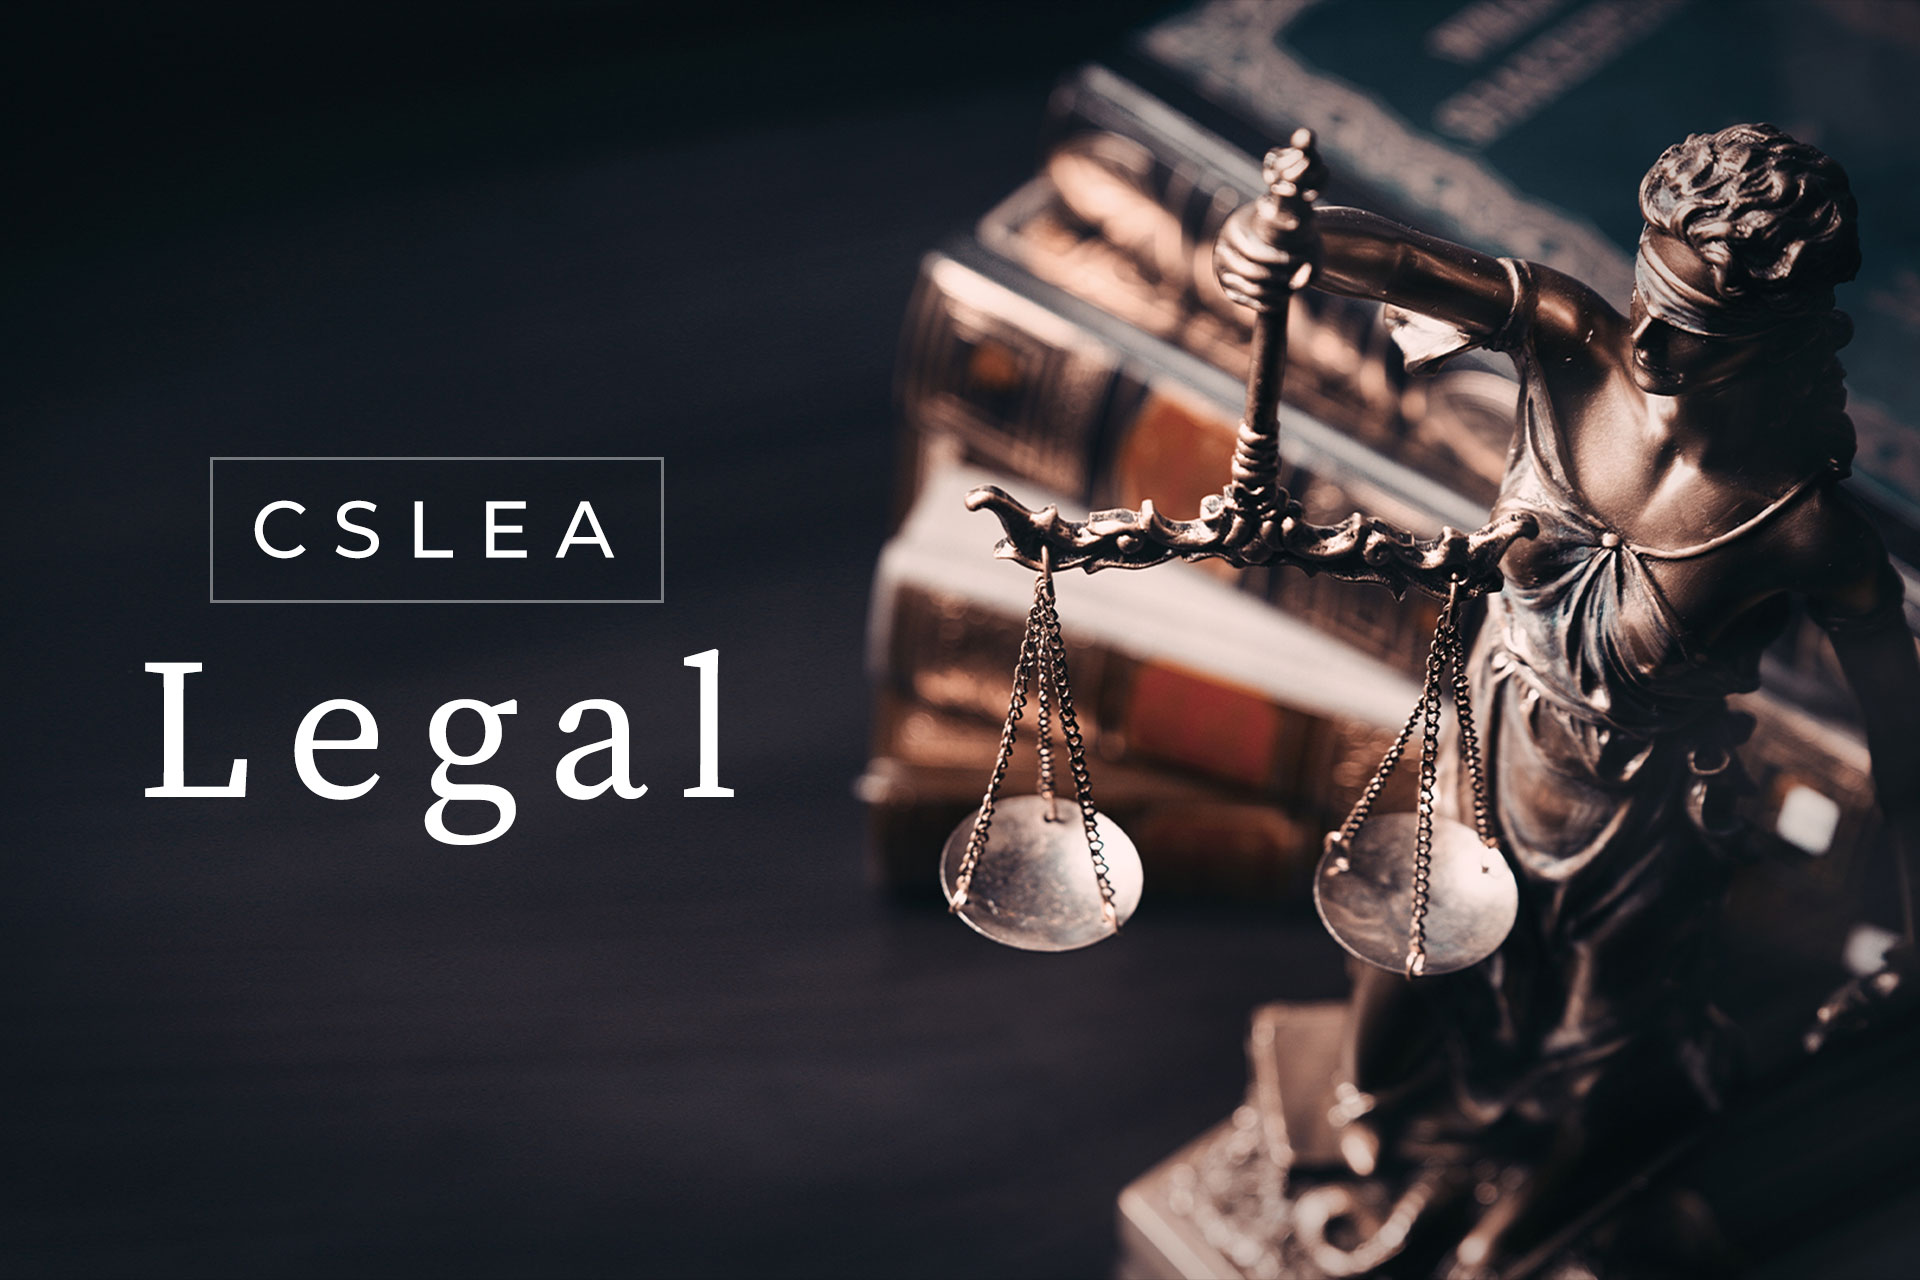 CSLEA Legal